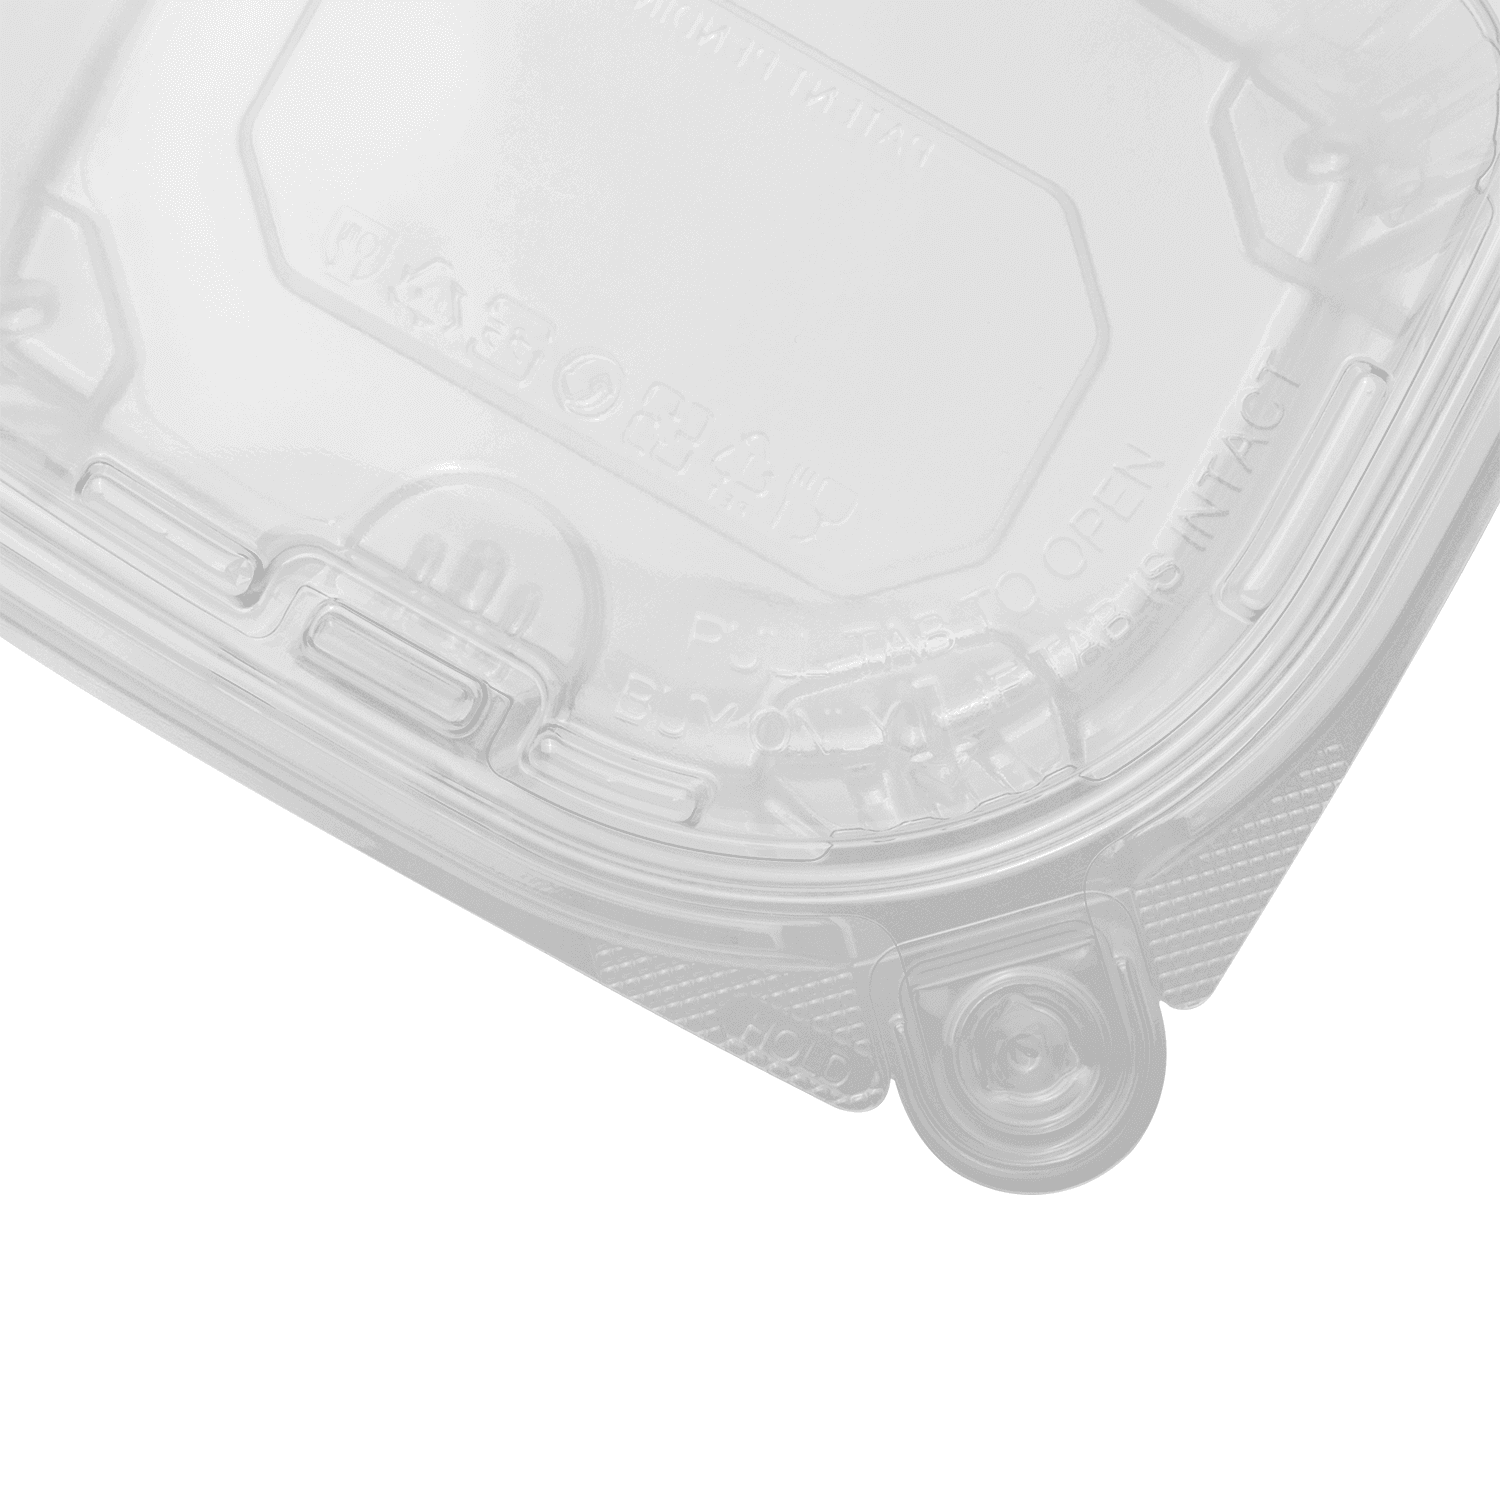 Karat 16oz PET Plastic Tamper Resistant Hinged Deli Container with Lid - 200 pcs